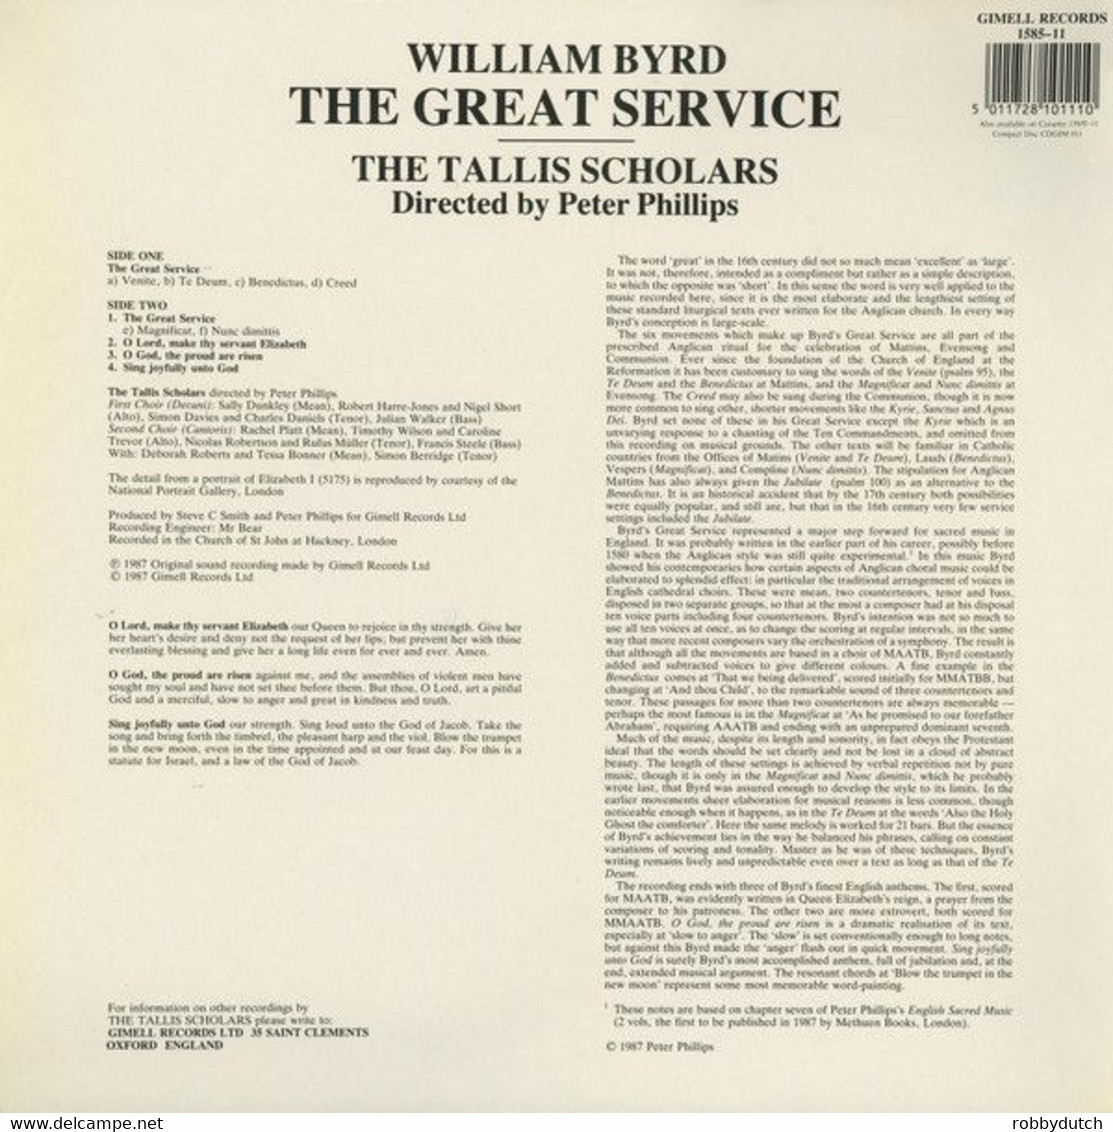 * LP * WILLIAM BYRD: THE GREAT SERVICE - THE TALLIS SCHOLARS (U.K. 1987 Digital Ex-!!!) - Canciones Religiosas Y  Gospels